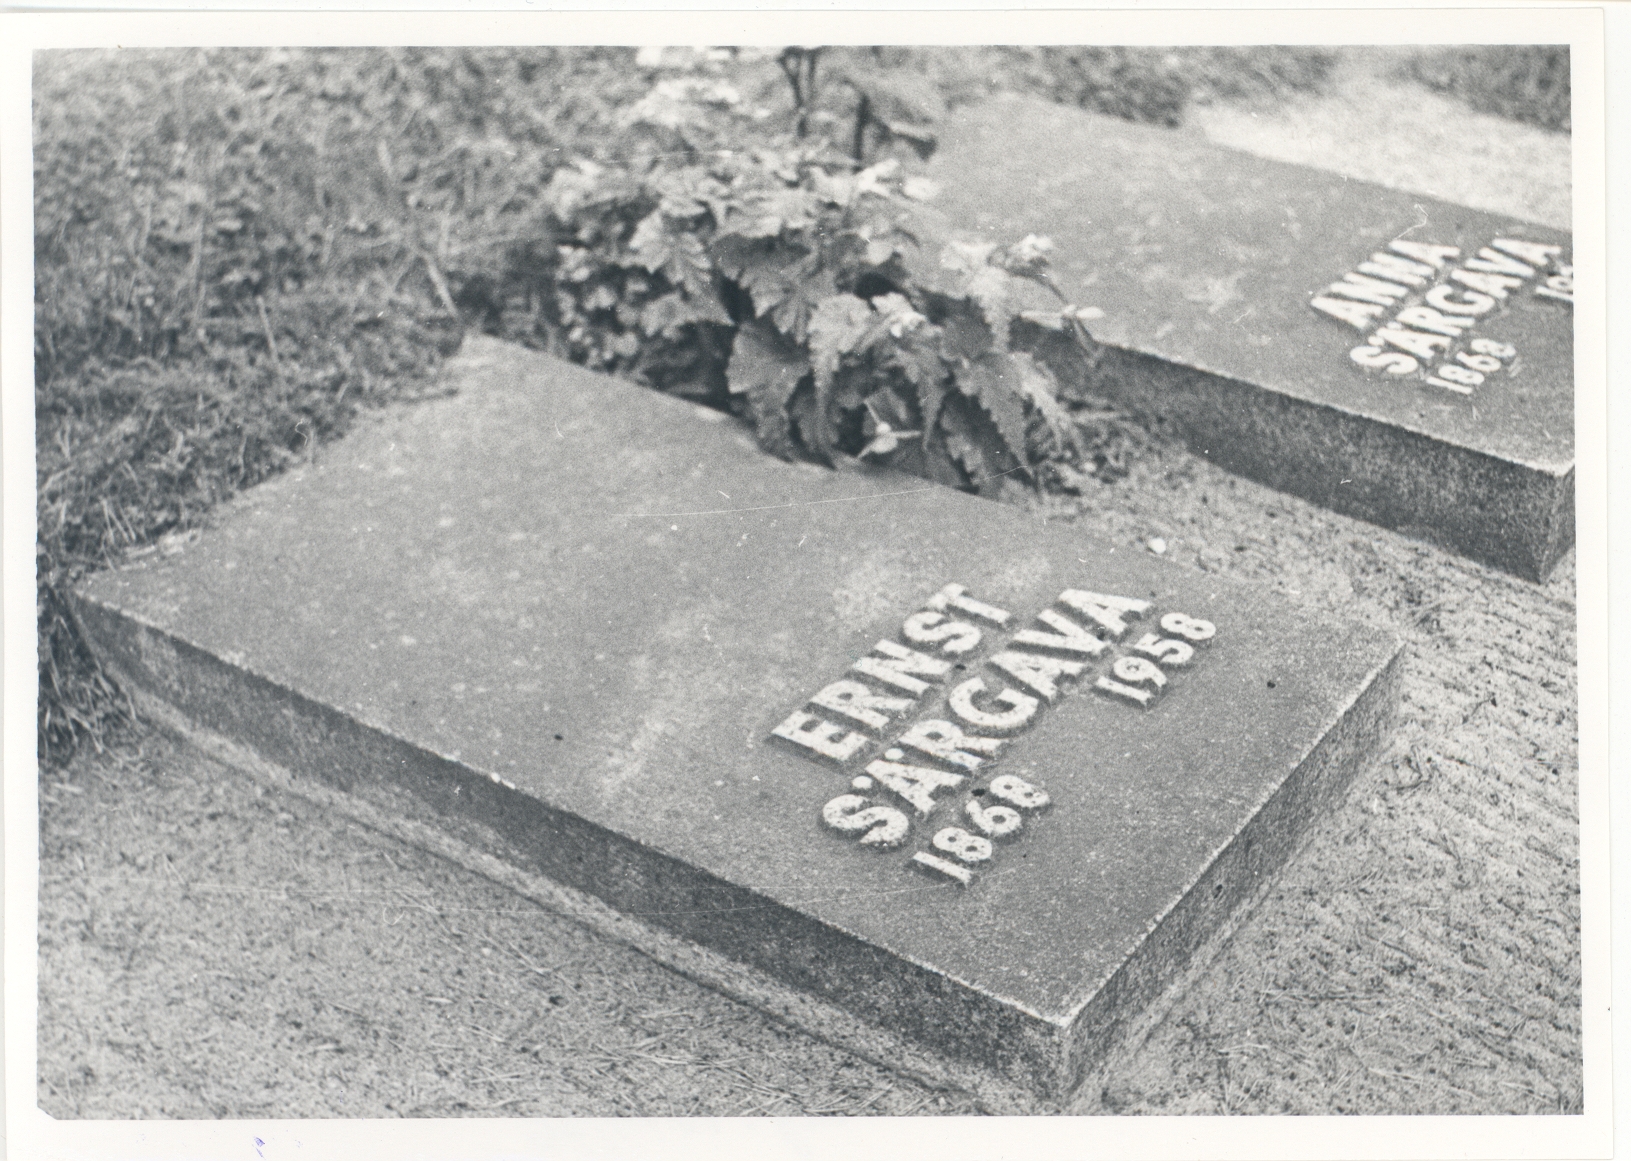 Ernst and Anna Särgava graves in Tallinn at the Forest Hallmist in 1974.